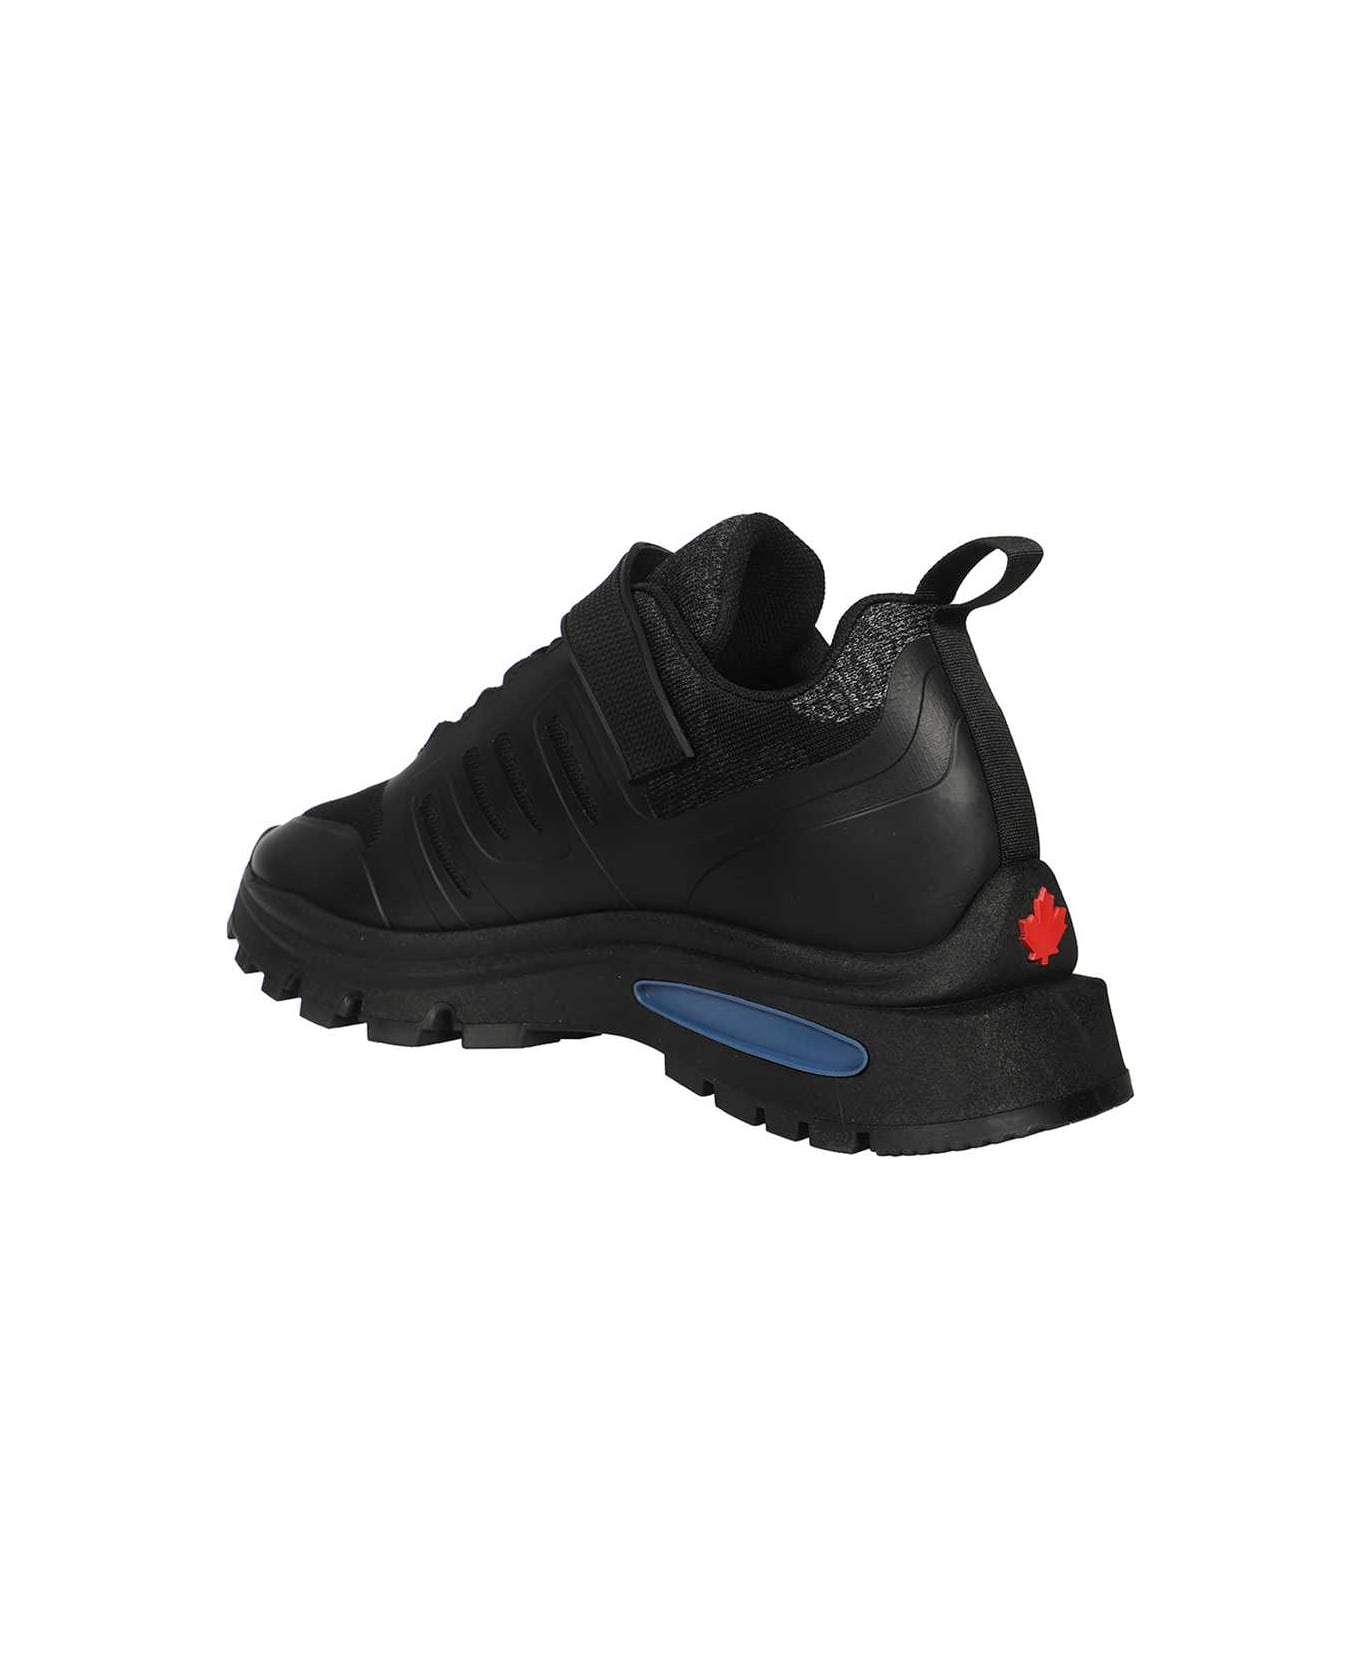 Dsquared2 Sneaker Runds2 - black